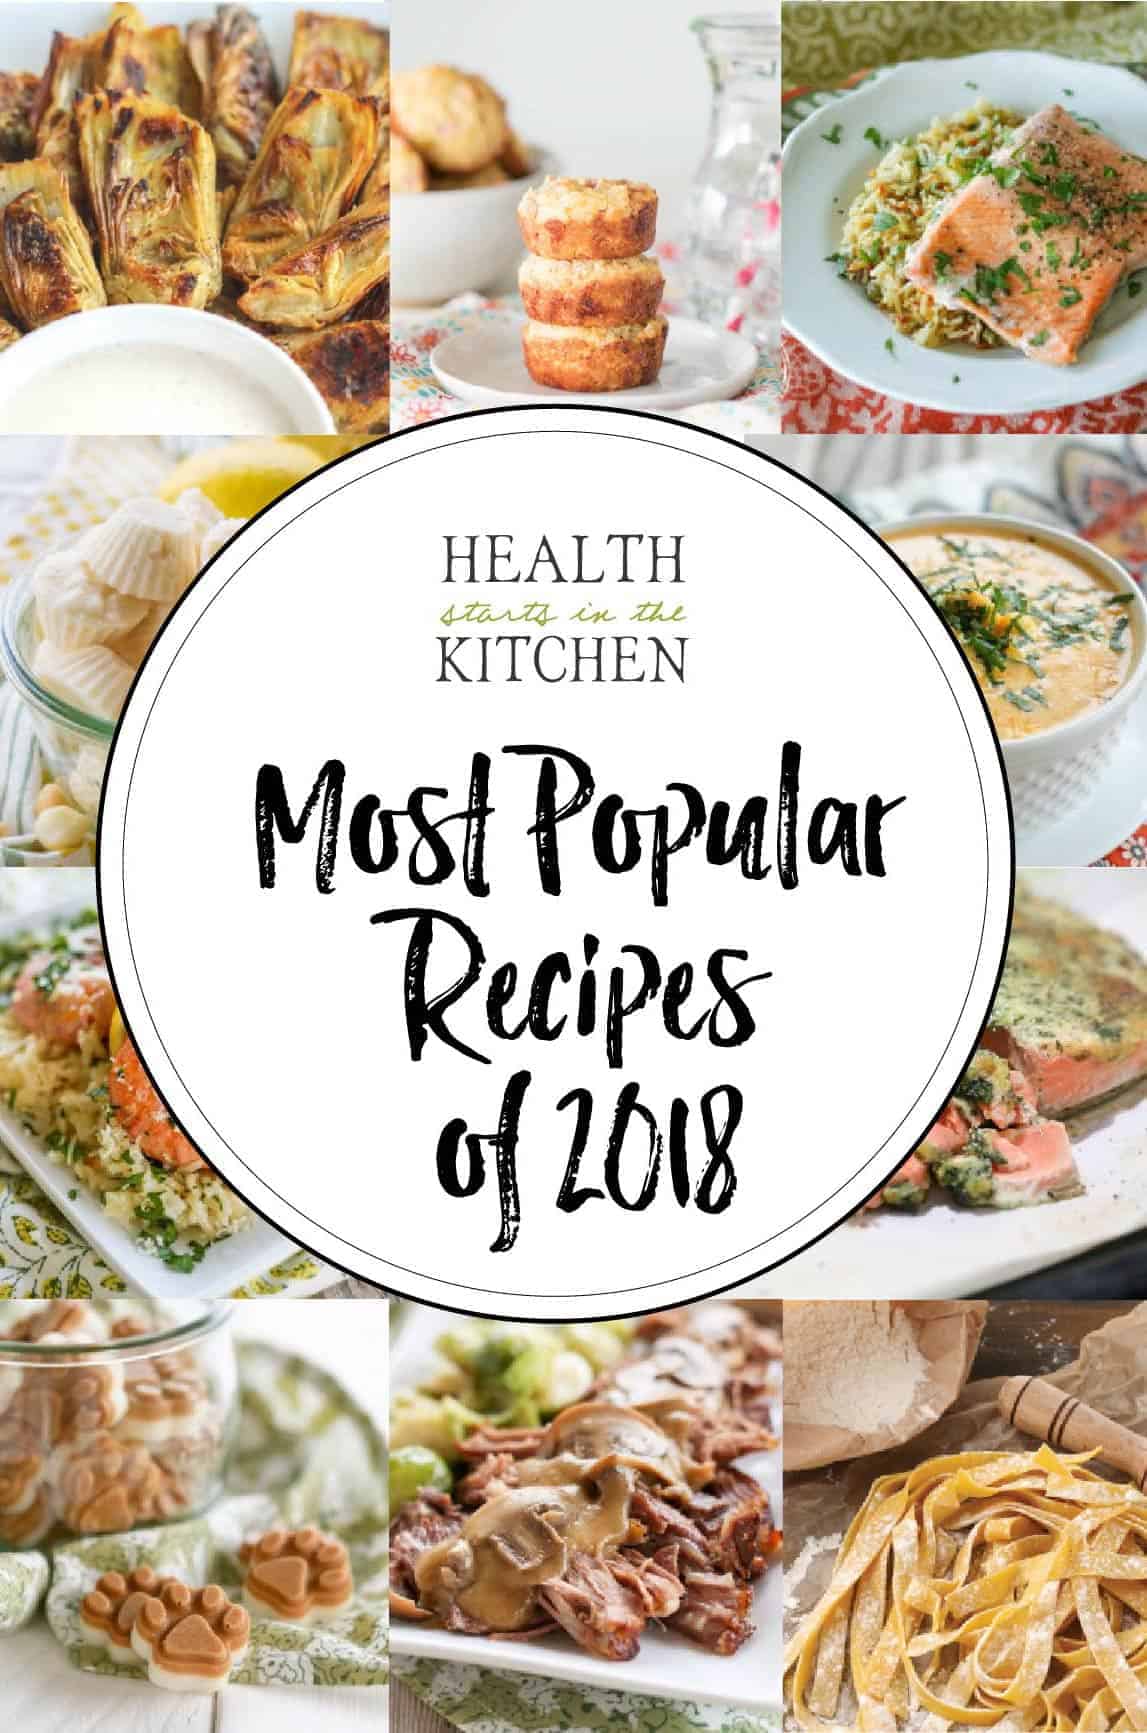 My Top 10 Most Popular Recipes of 2018